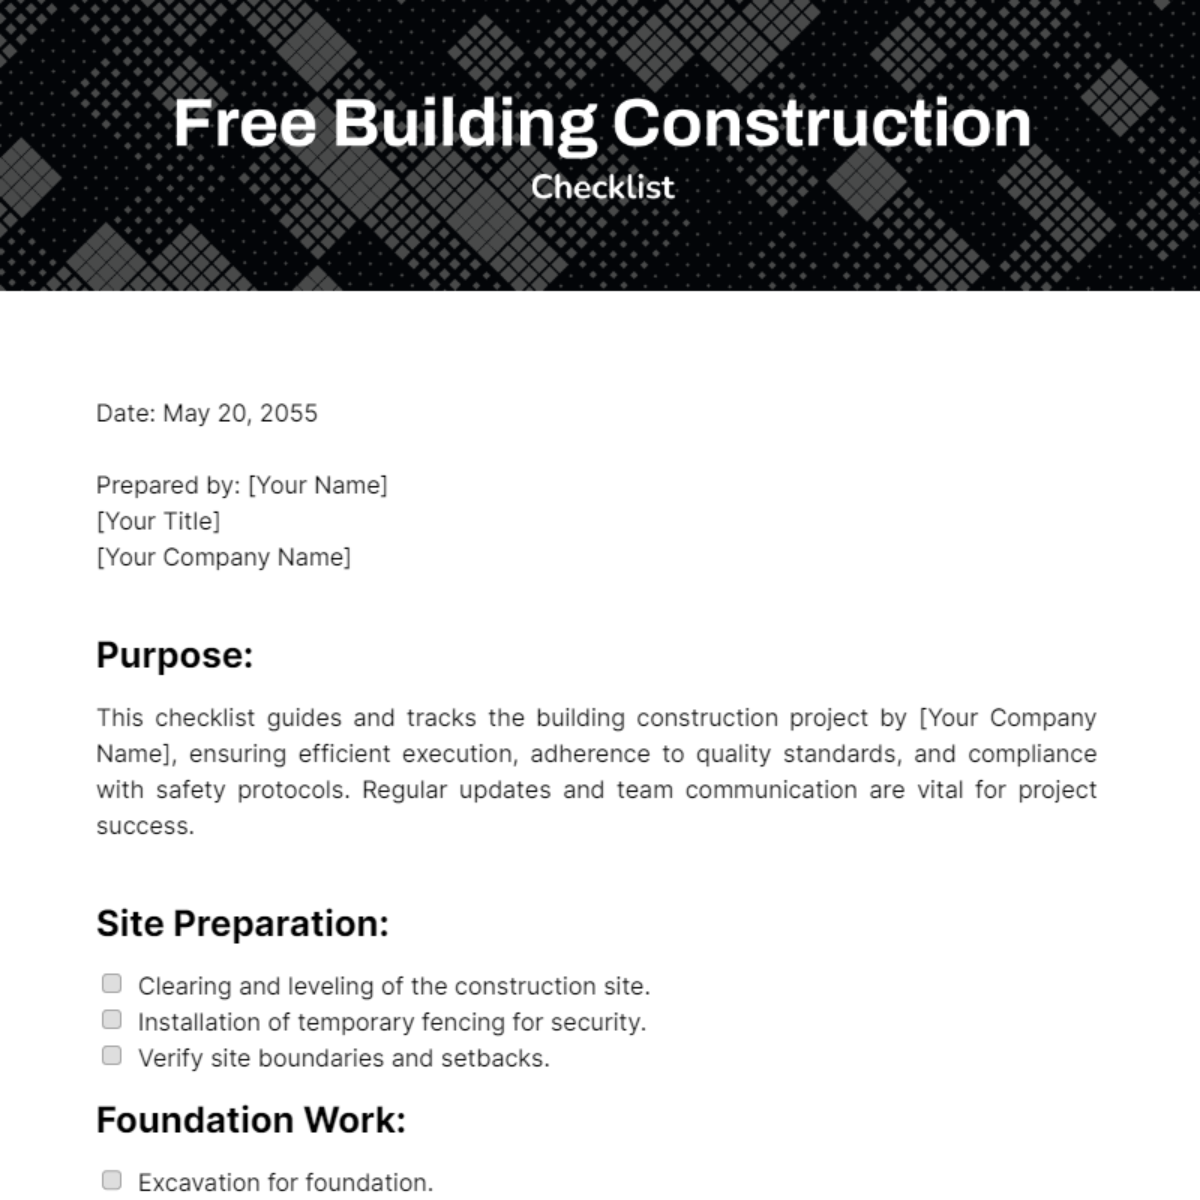 Building Construction Checklist Template